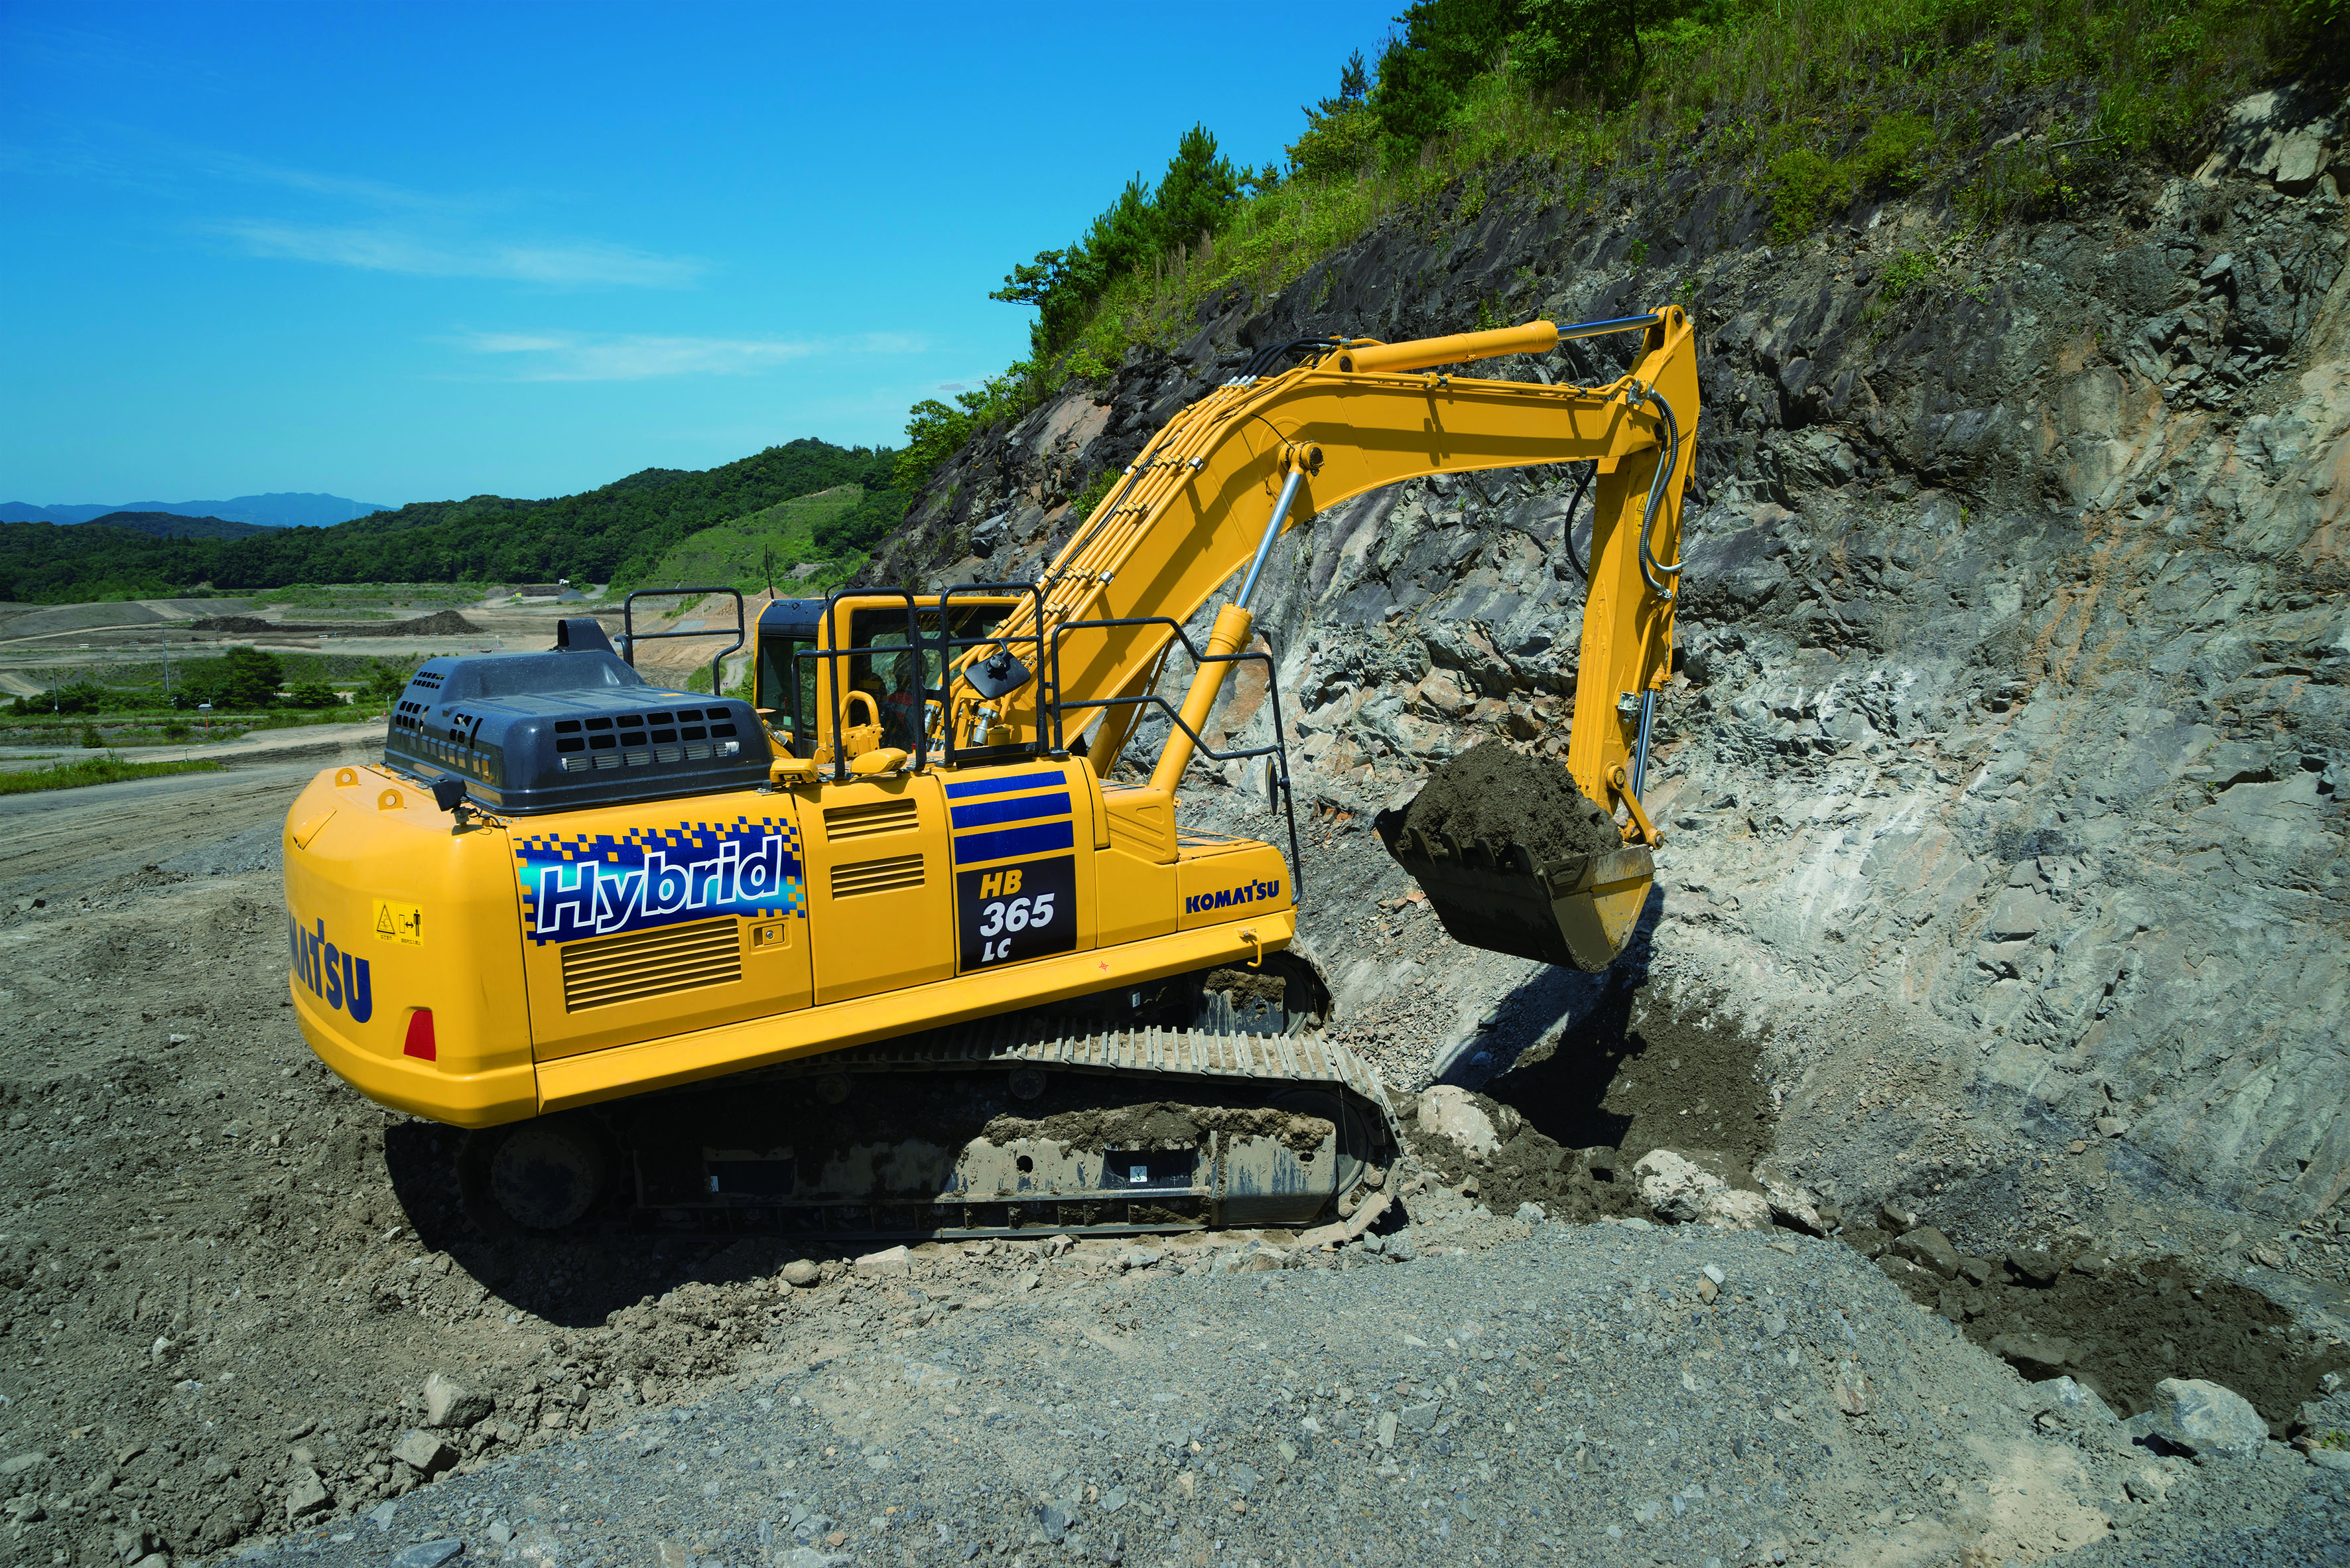 Komatsu Hb365lc Hybrid Excavator 3543x2364